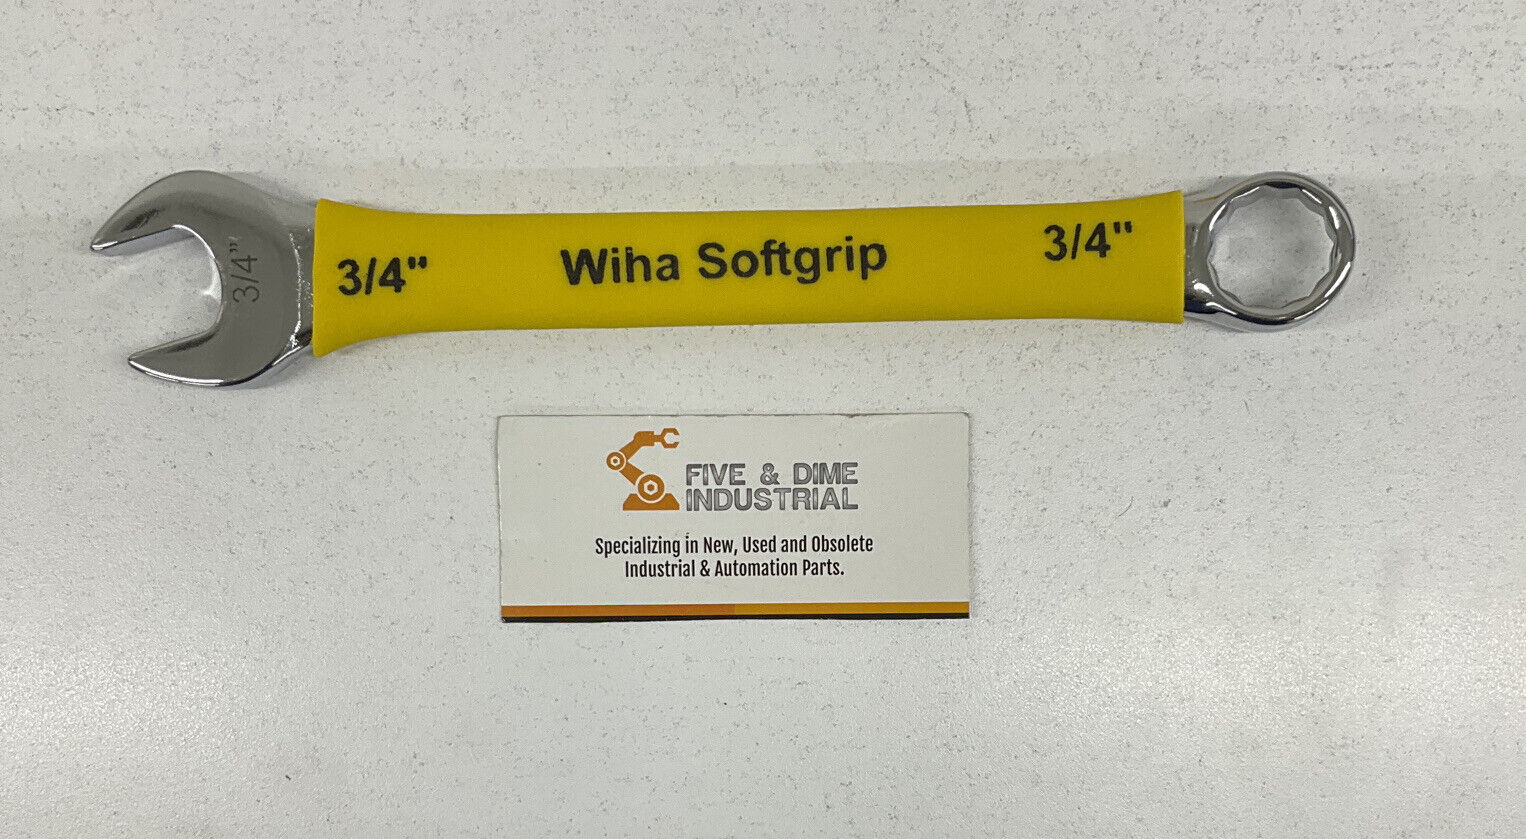 Wiha Softgrip Combination Wrench 3/4" (BK124)